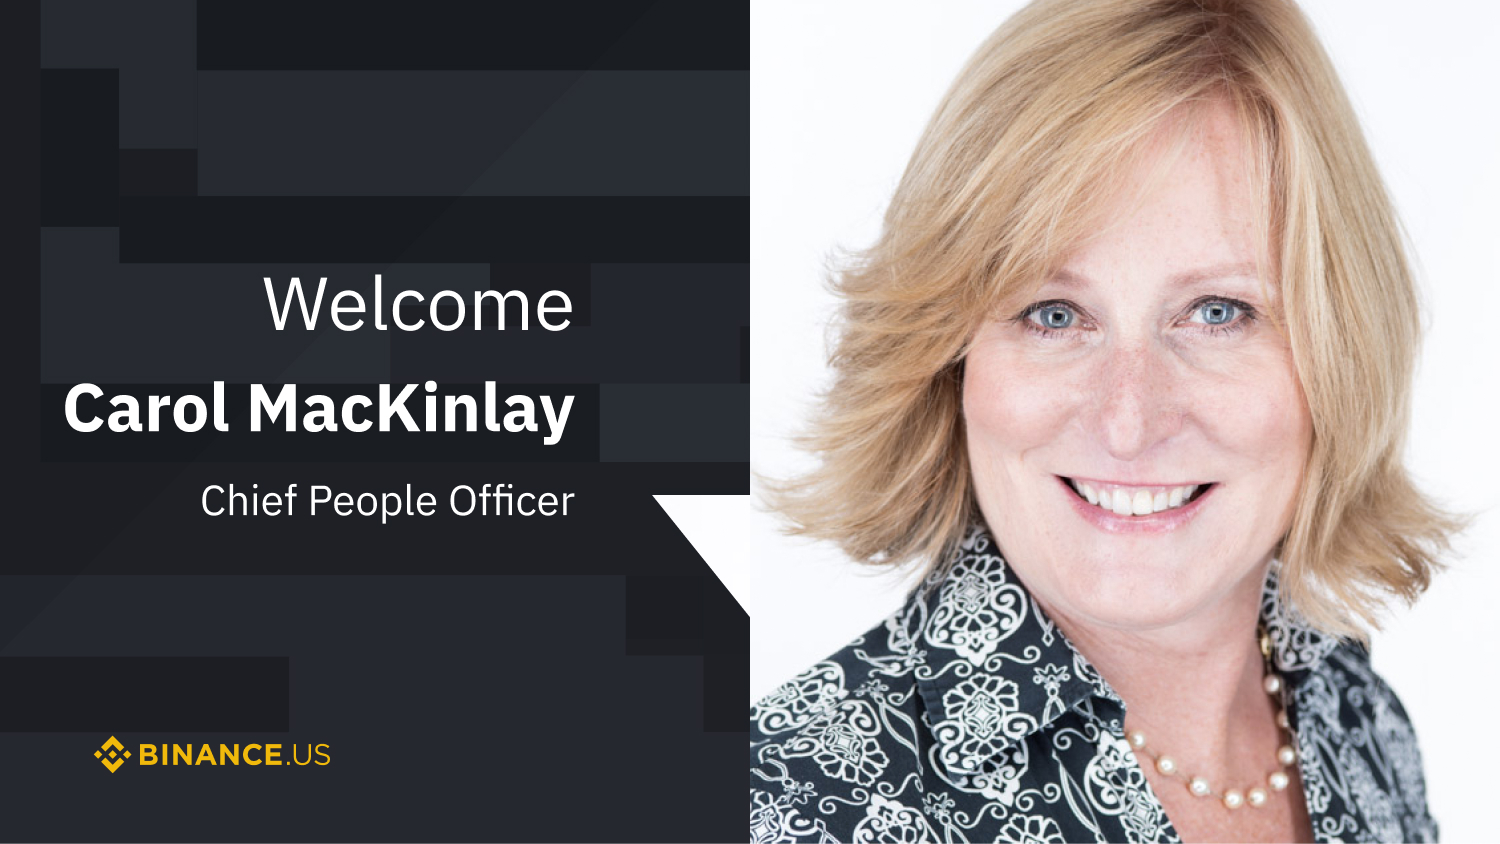 Carol MacKinlay Joins Binance.US as Chief People Officer